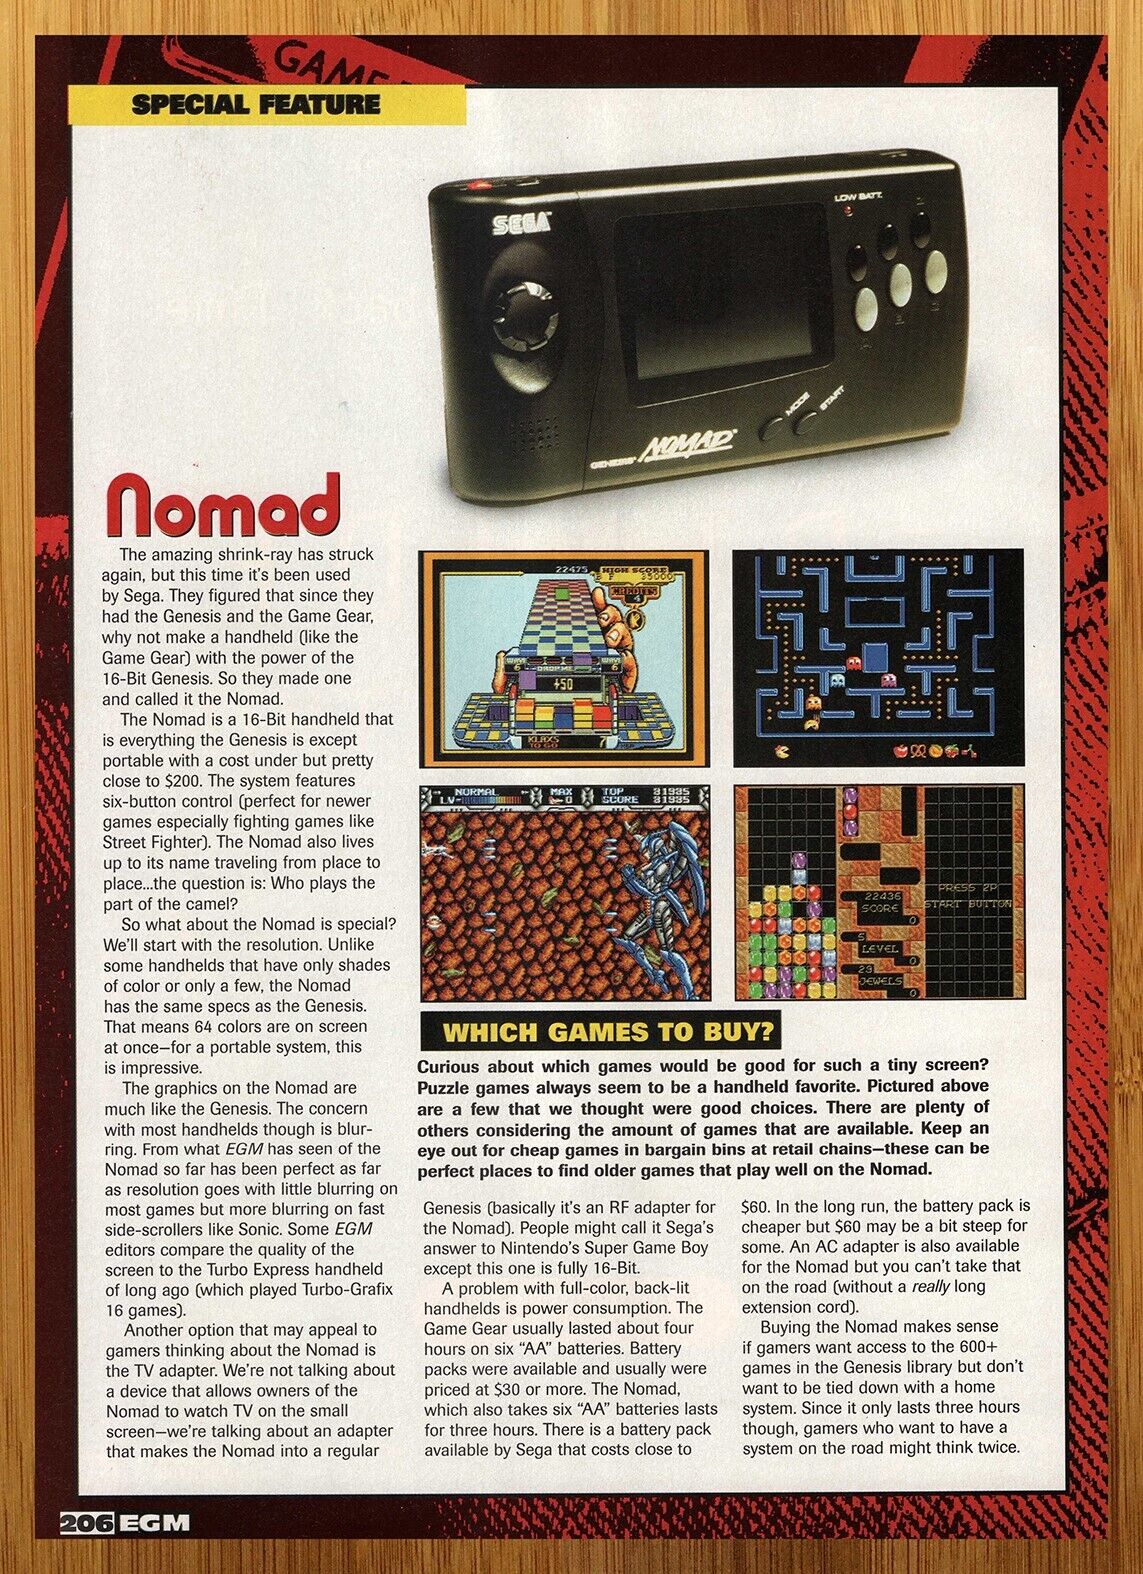 1996 Sega Nomad Vintage Print Ad/Poster Retro Video Game Console Promo Art 90s